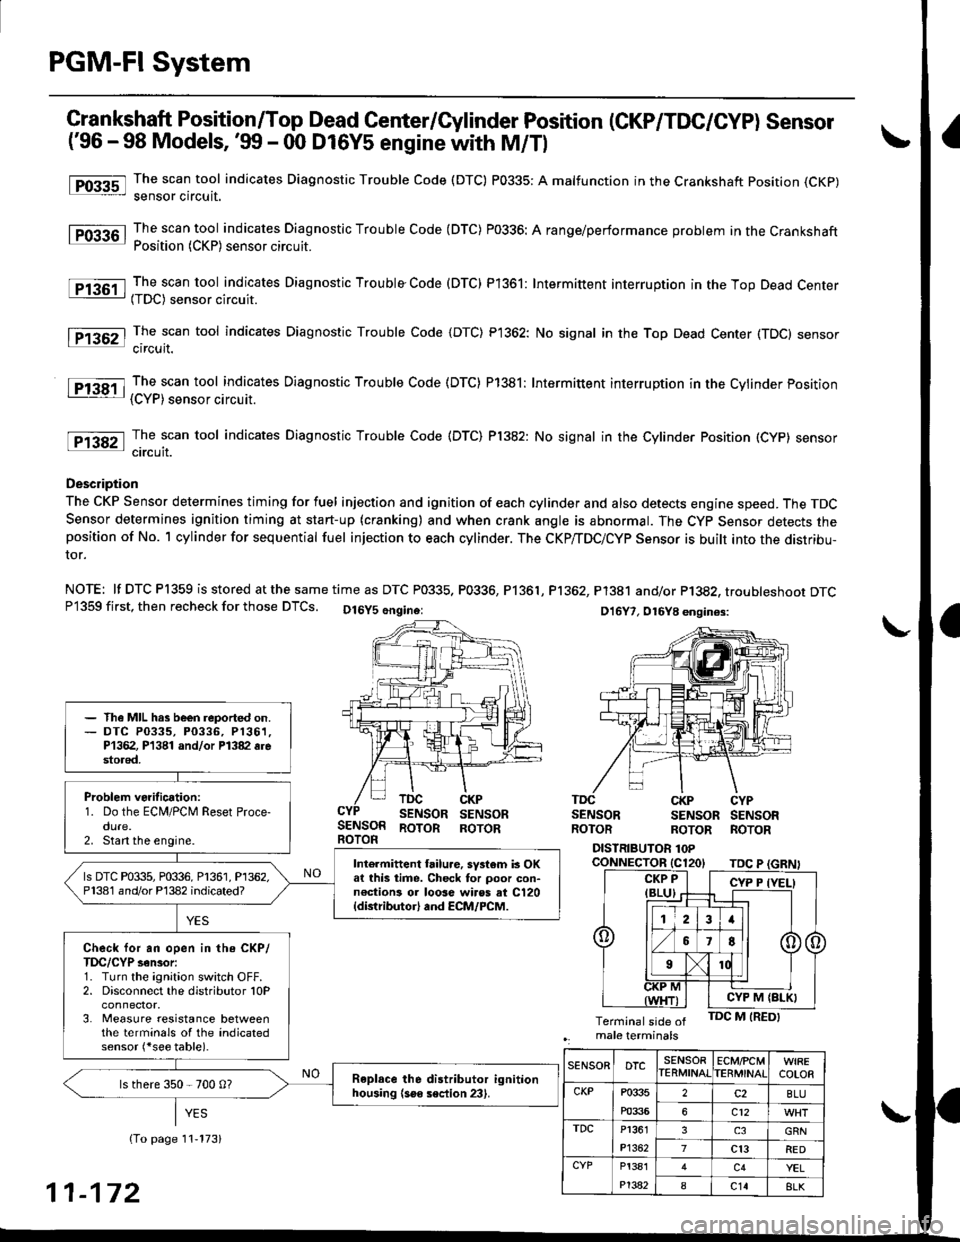 HONDA CIVIC 2000 6.G Workshop Manual PGM-FI System
tFos3sl
tFffi6l
tPr361 I
fPfi62l
fFr38il
tF13s2-l
Crankshaft Position/Top Dead Genter/Gylinder Position (CKP/TDC/CYP) Sensor
(96 - 98 Models, !n - 00 D16Y5 engine with M/Tl
The scan to